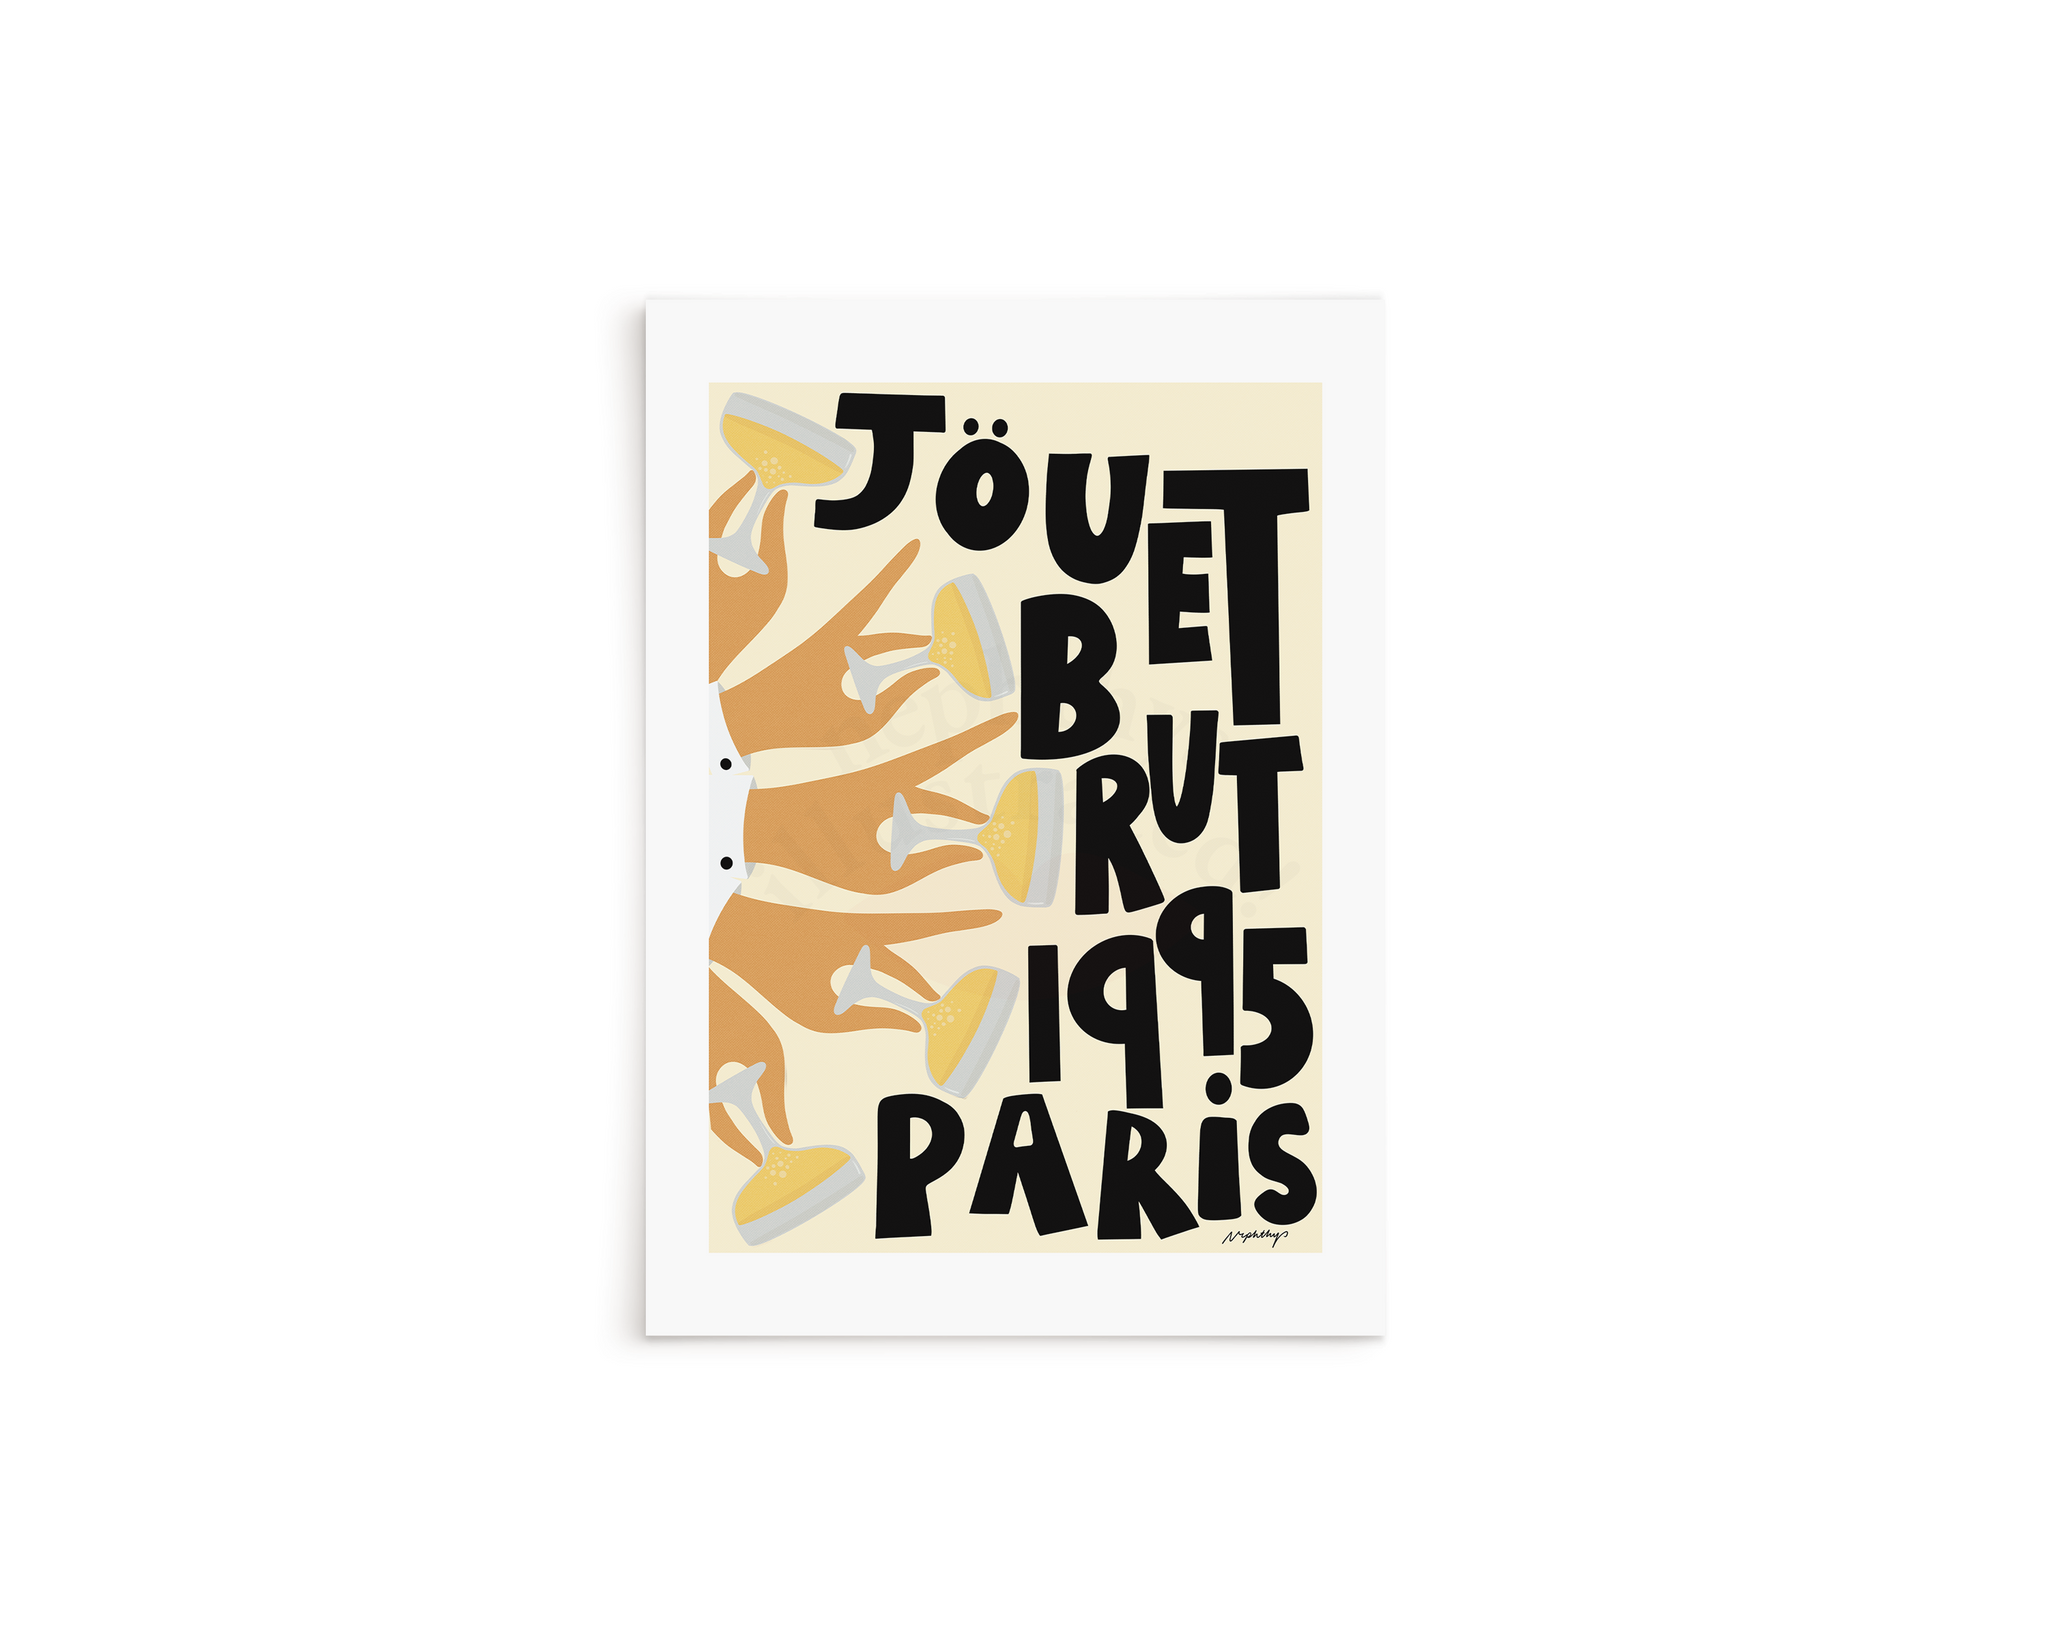 Jouet Brut 1995 Paris